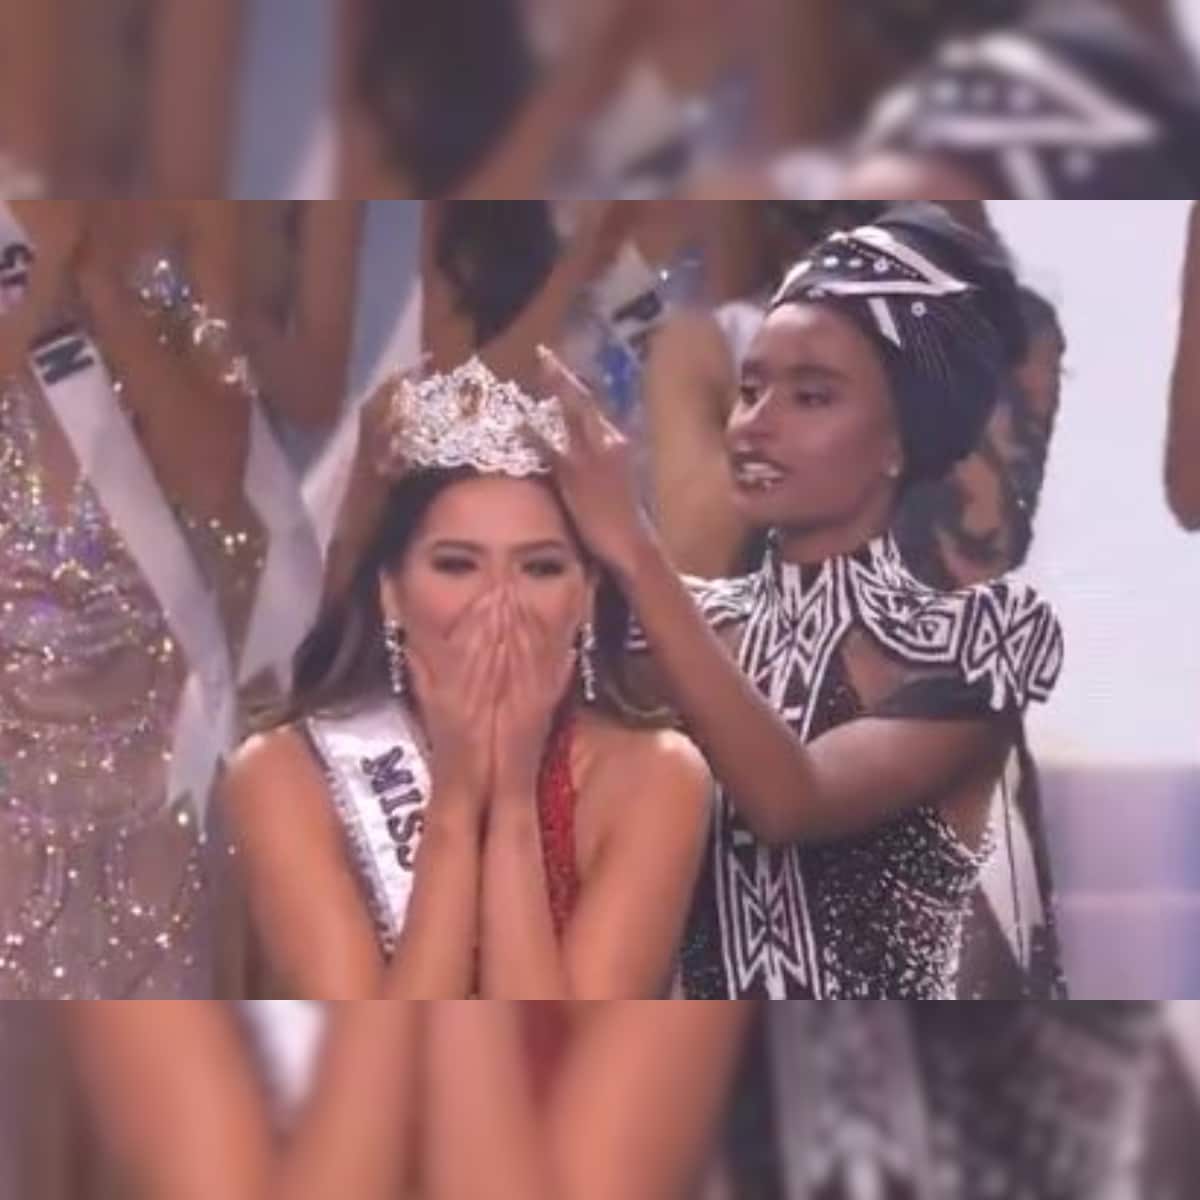 Miss Universe 21 Mexico S Andrea Meza Wins The Crown India S Adline Castelino In Top 5